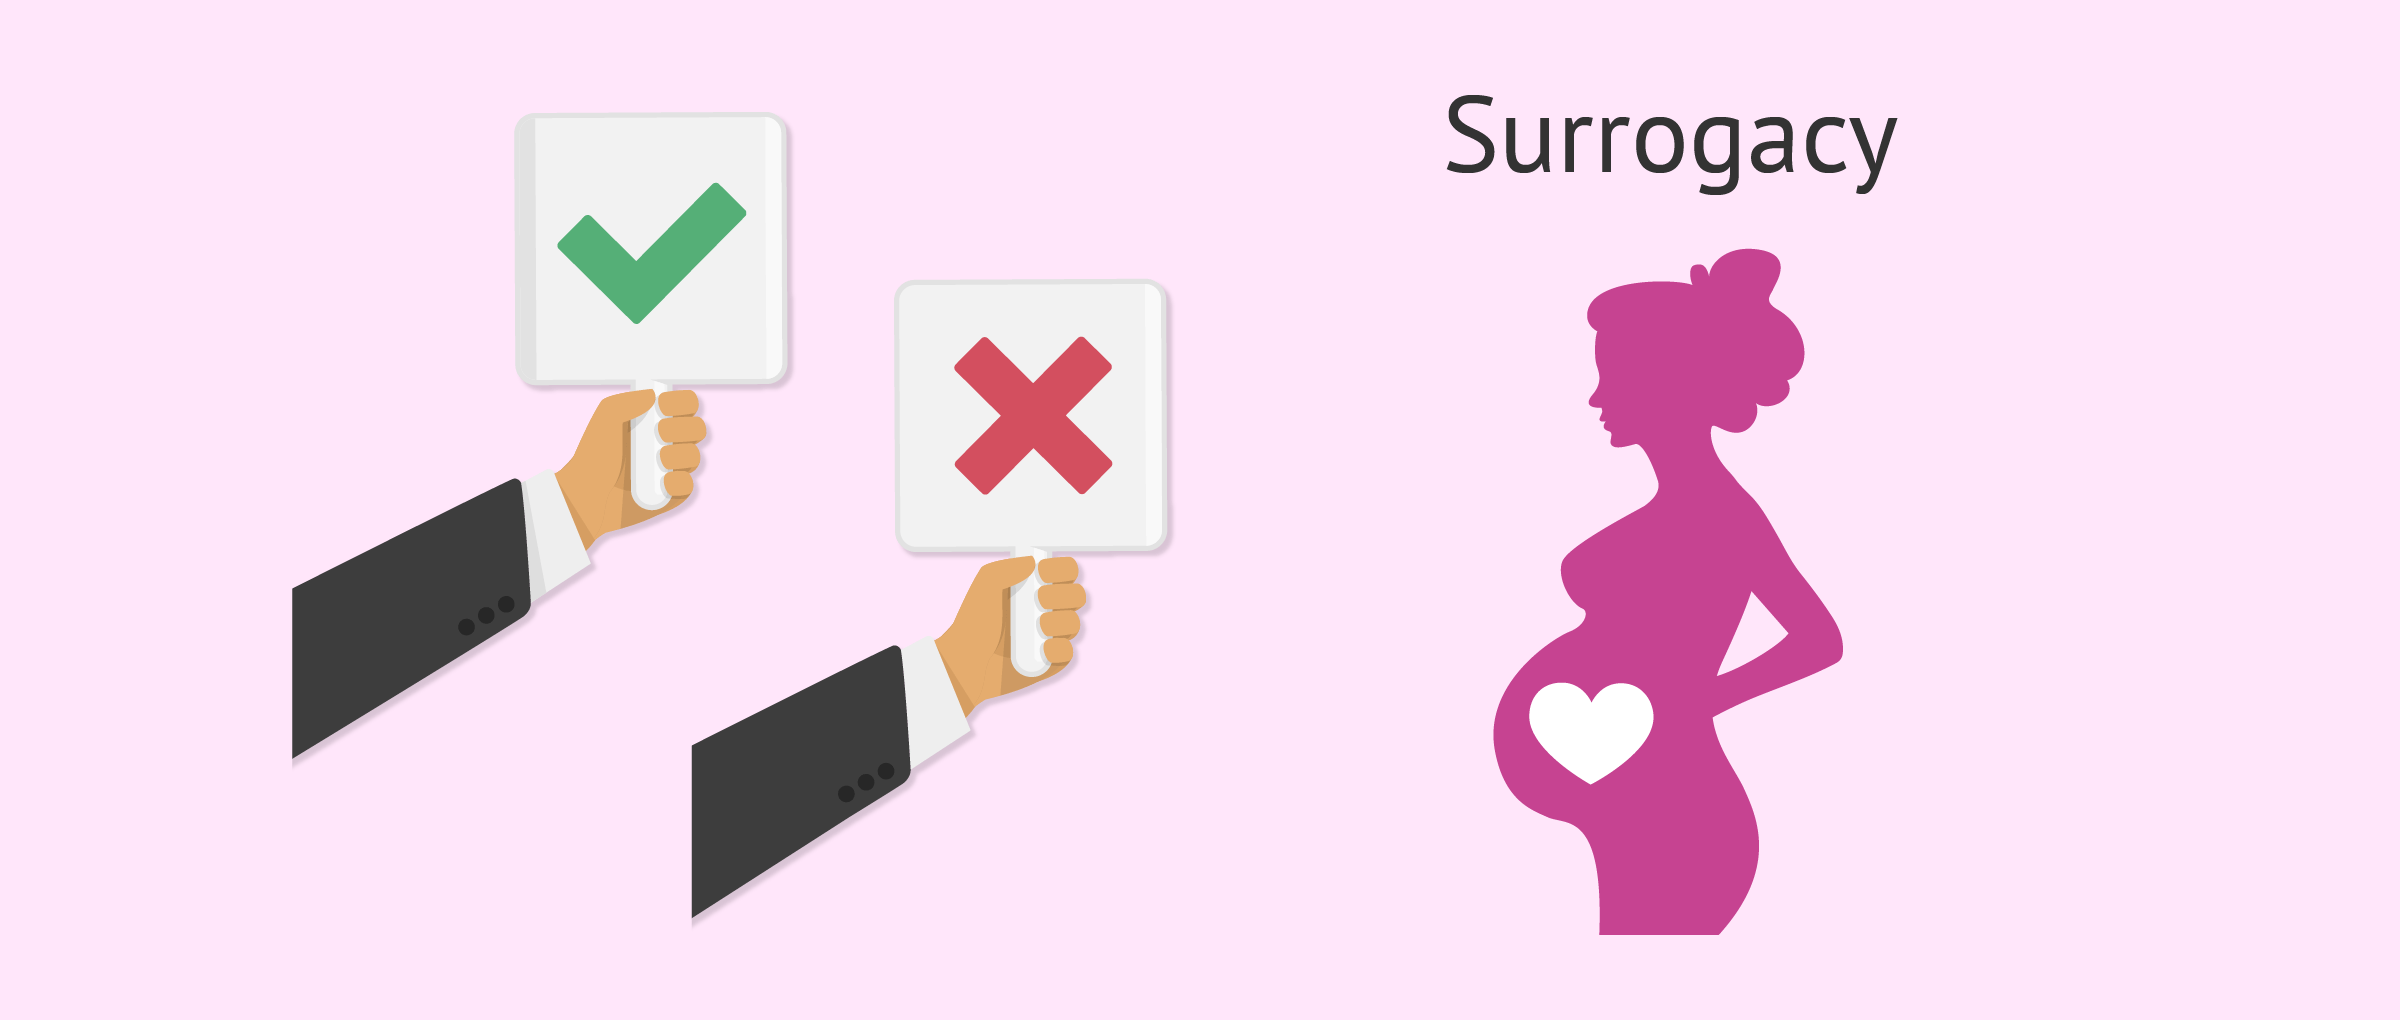 The surrogacy debate